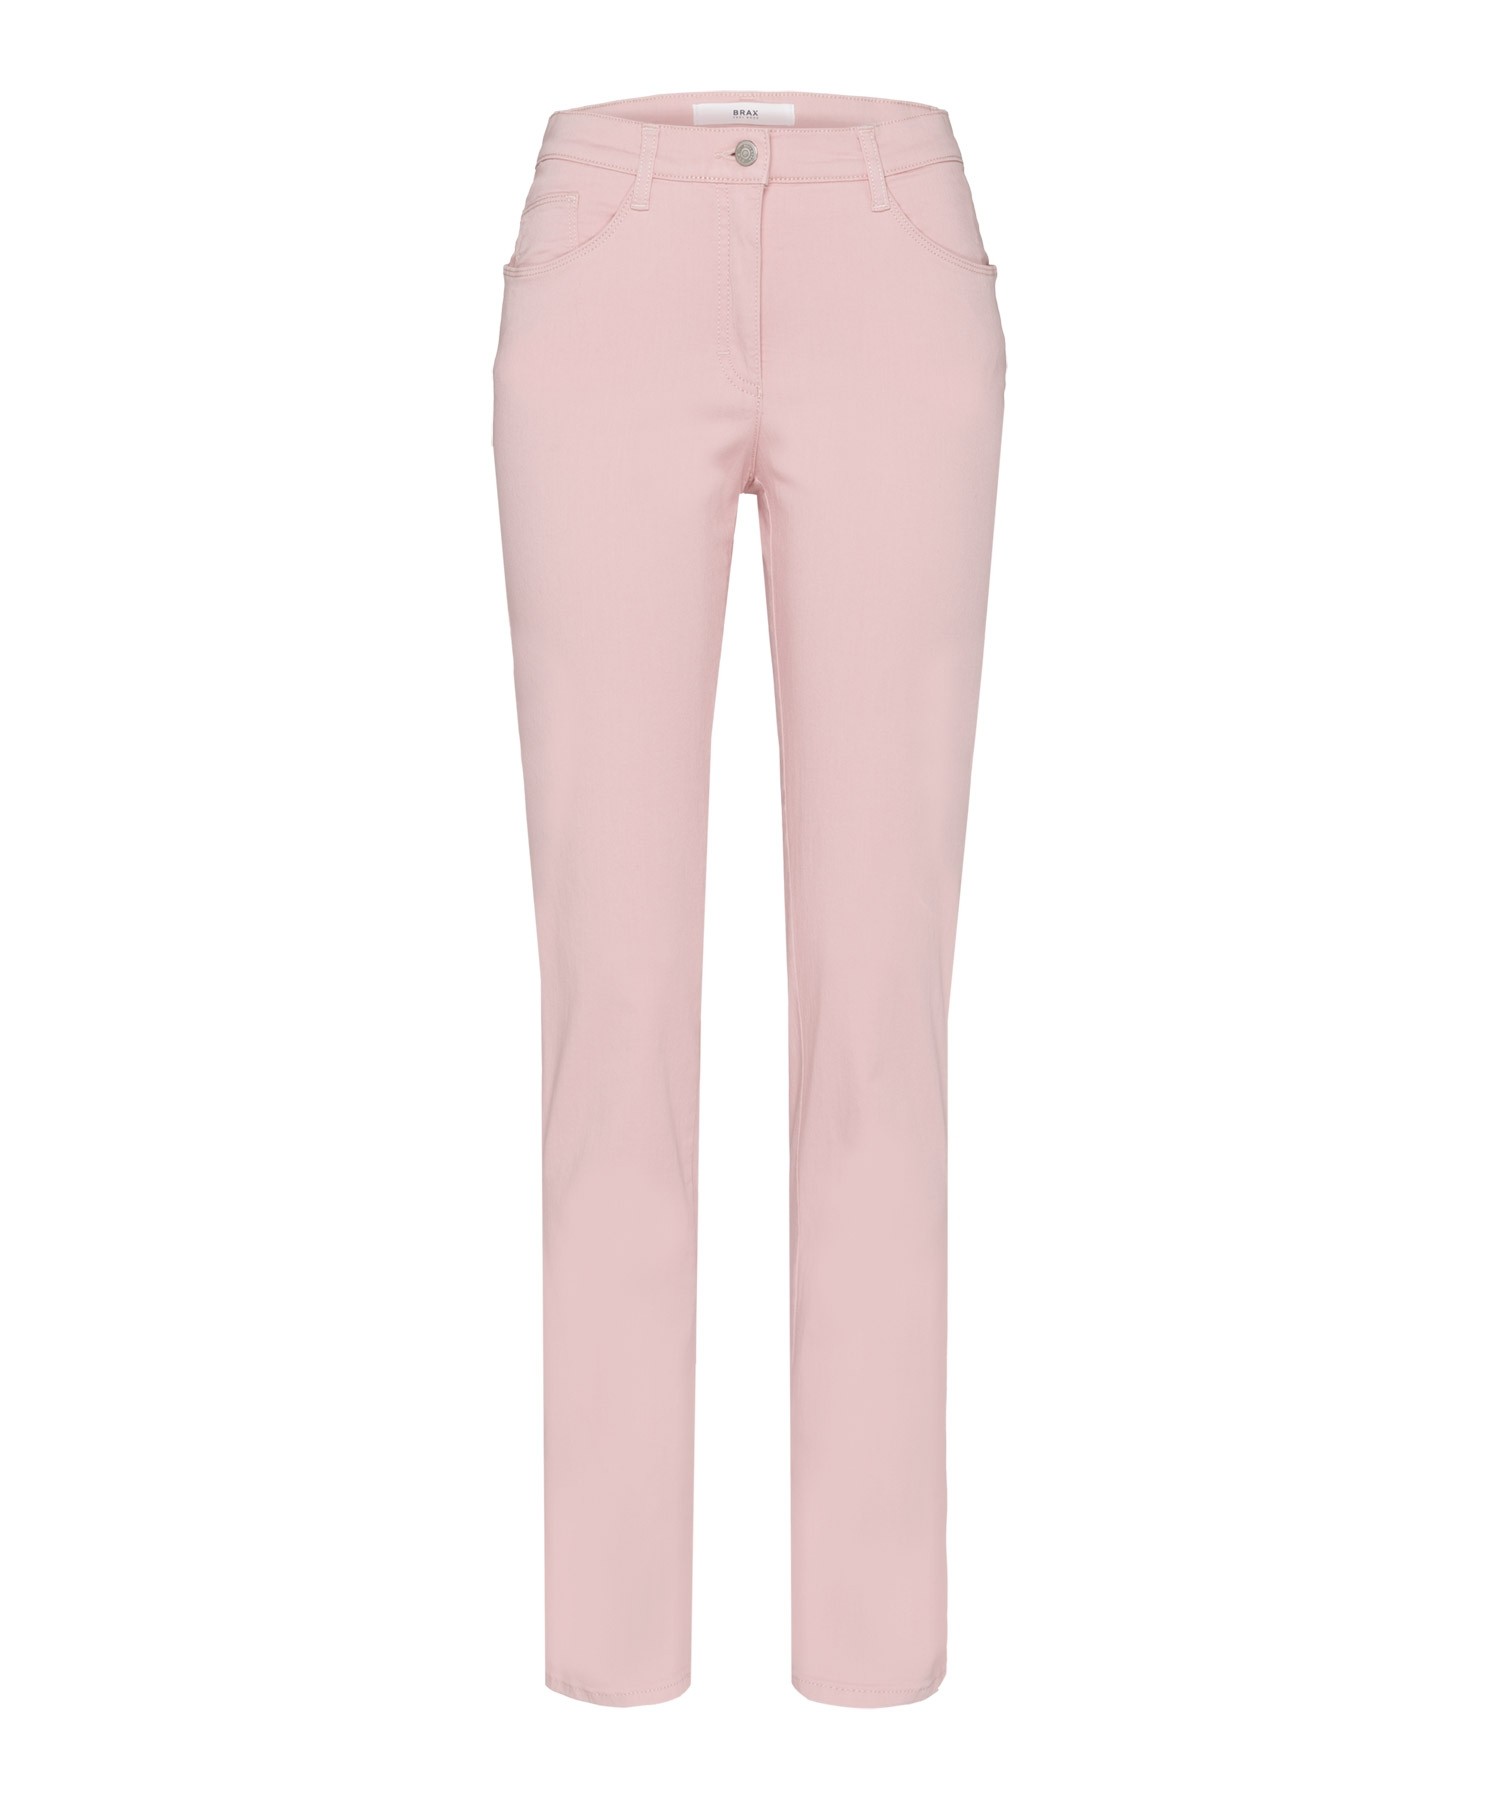 Brax Mary Crystal Slim Fit Jeans Pink in Brax Clothing Range